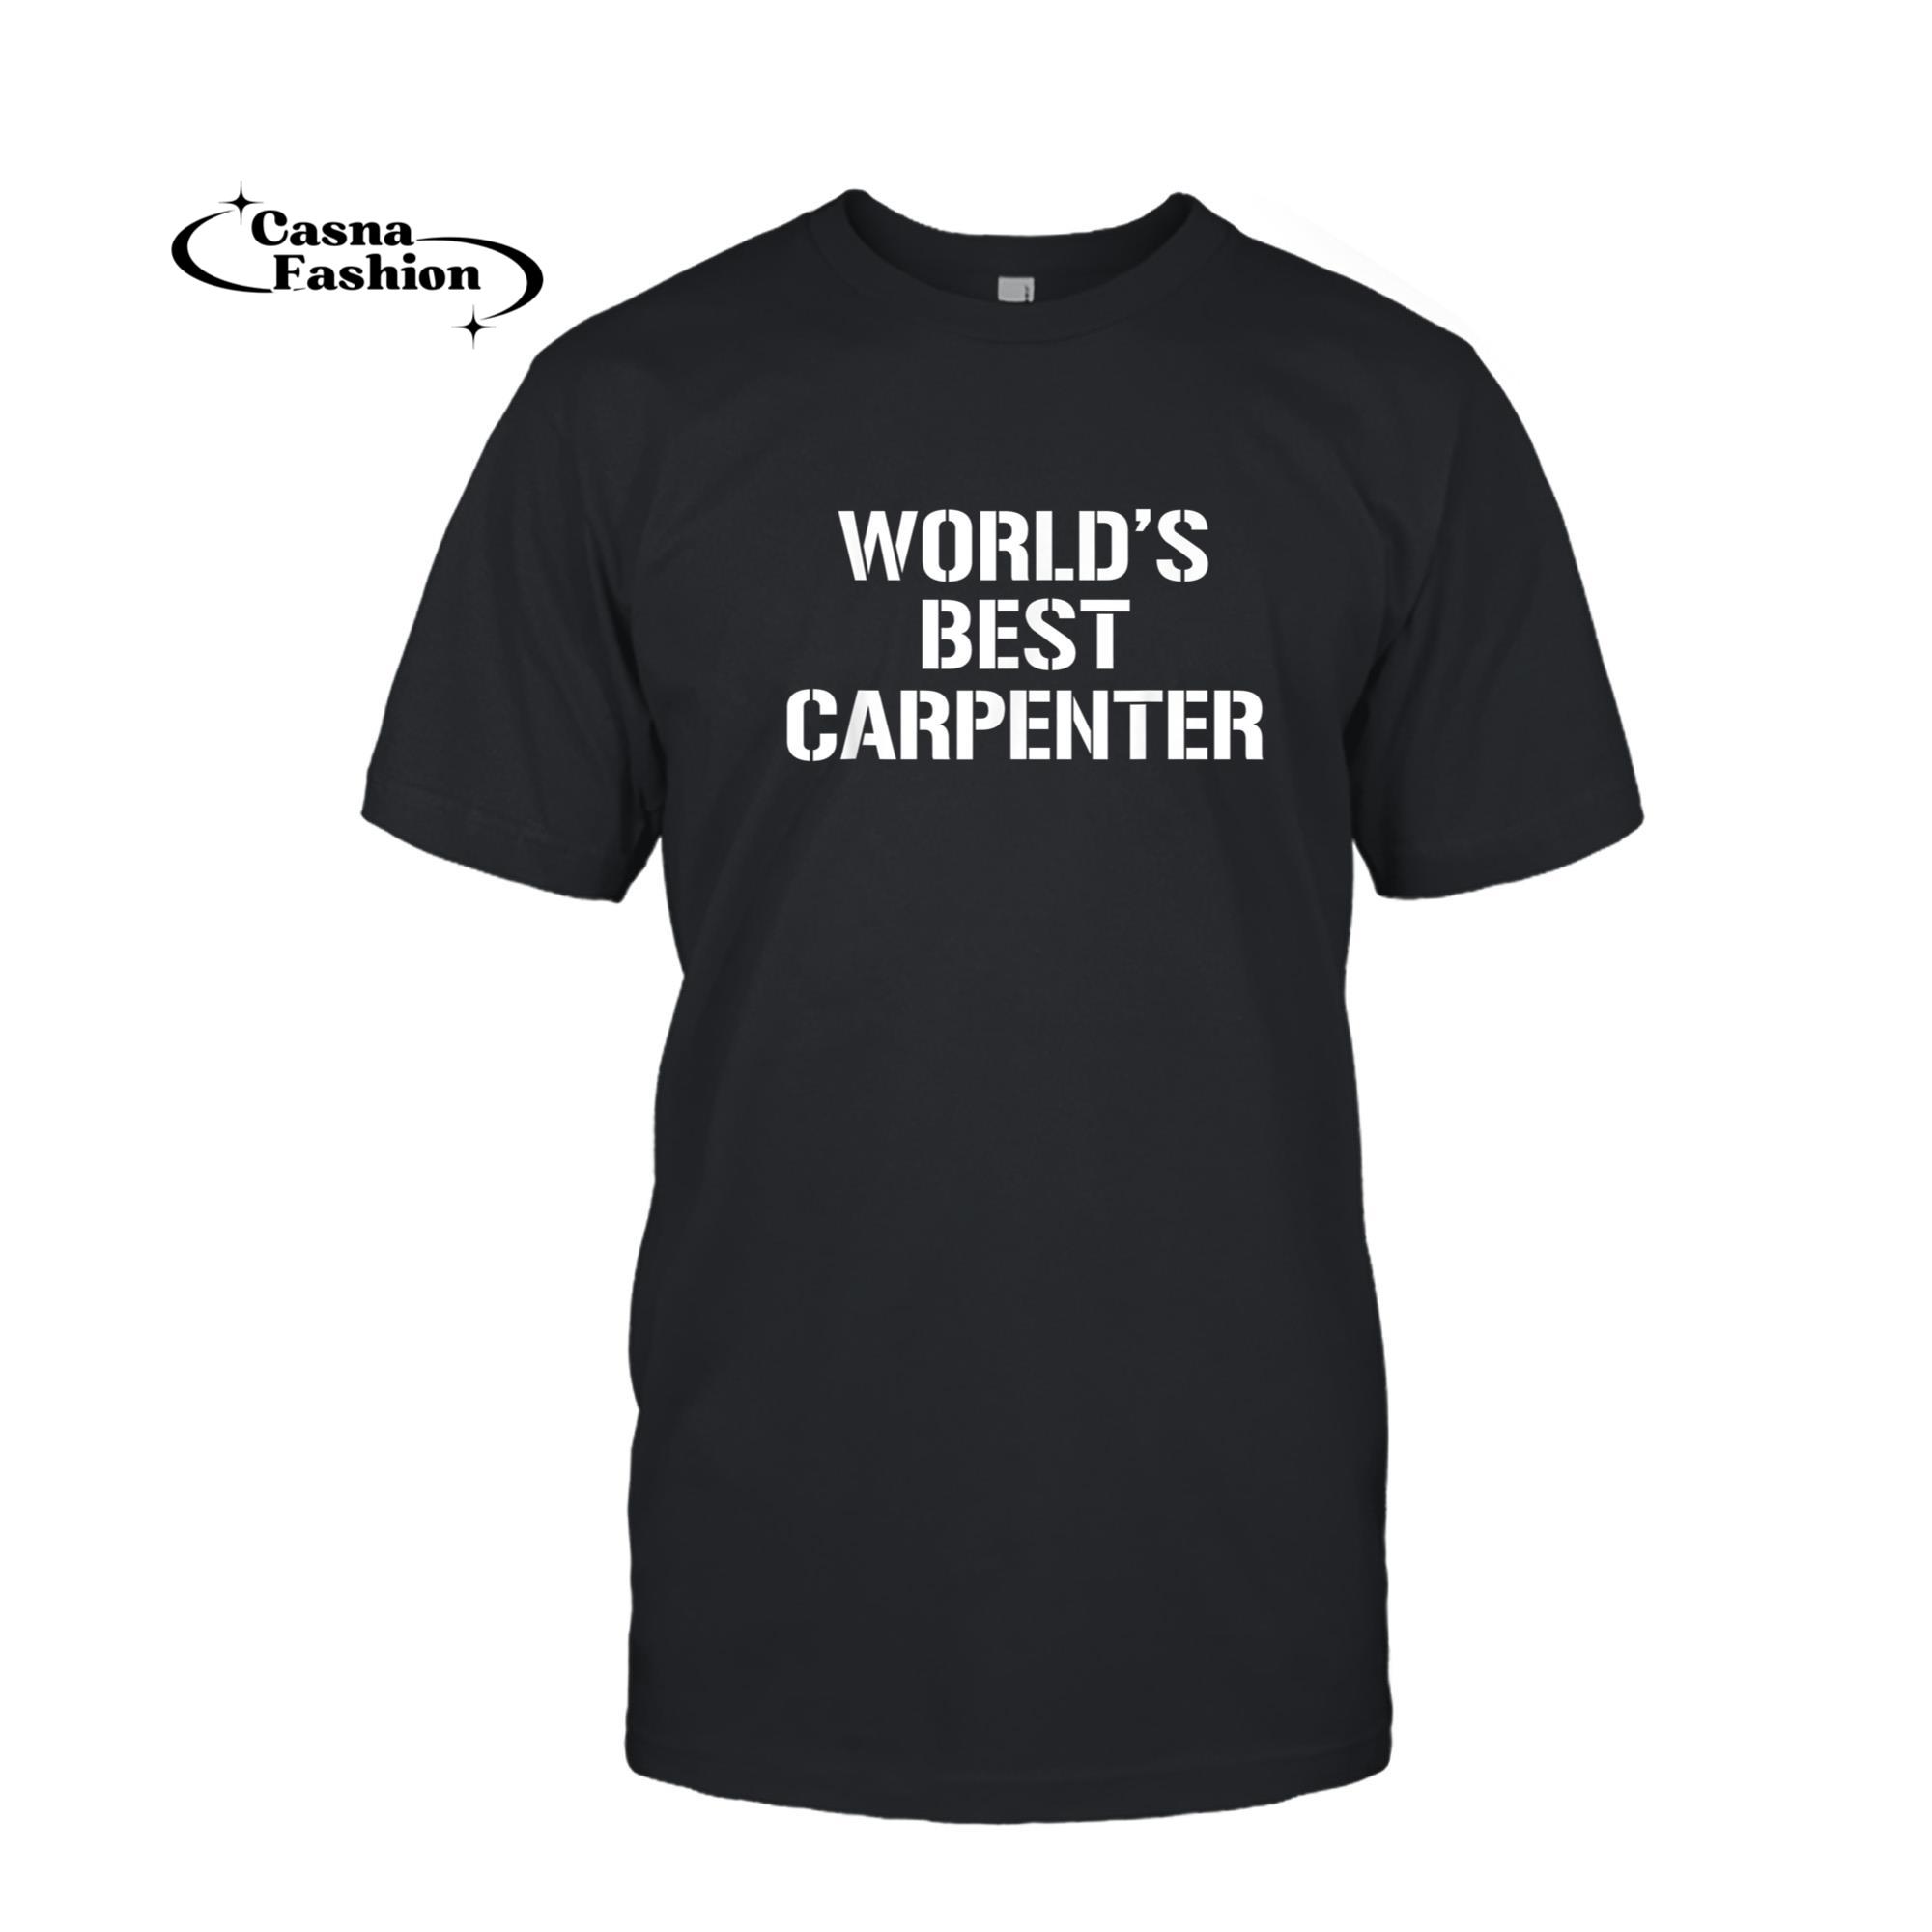 casnafashion_T-shirt_World's Best Carpenter Cool Carpentry Carpenter T-Shirt_T-shirt_Black